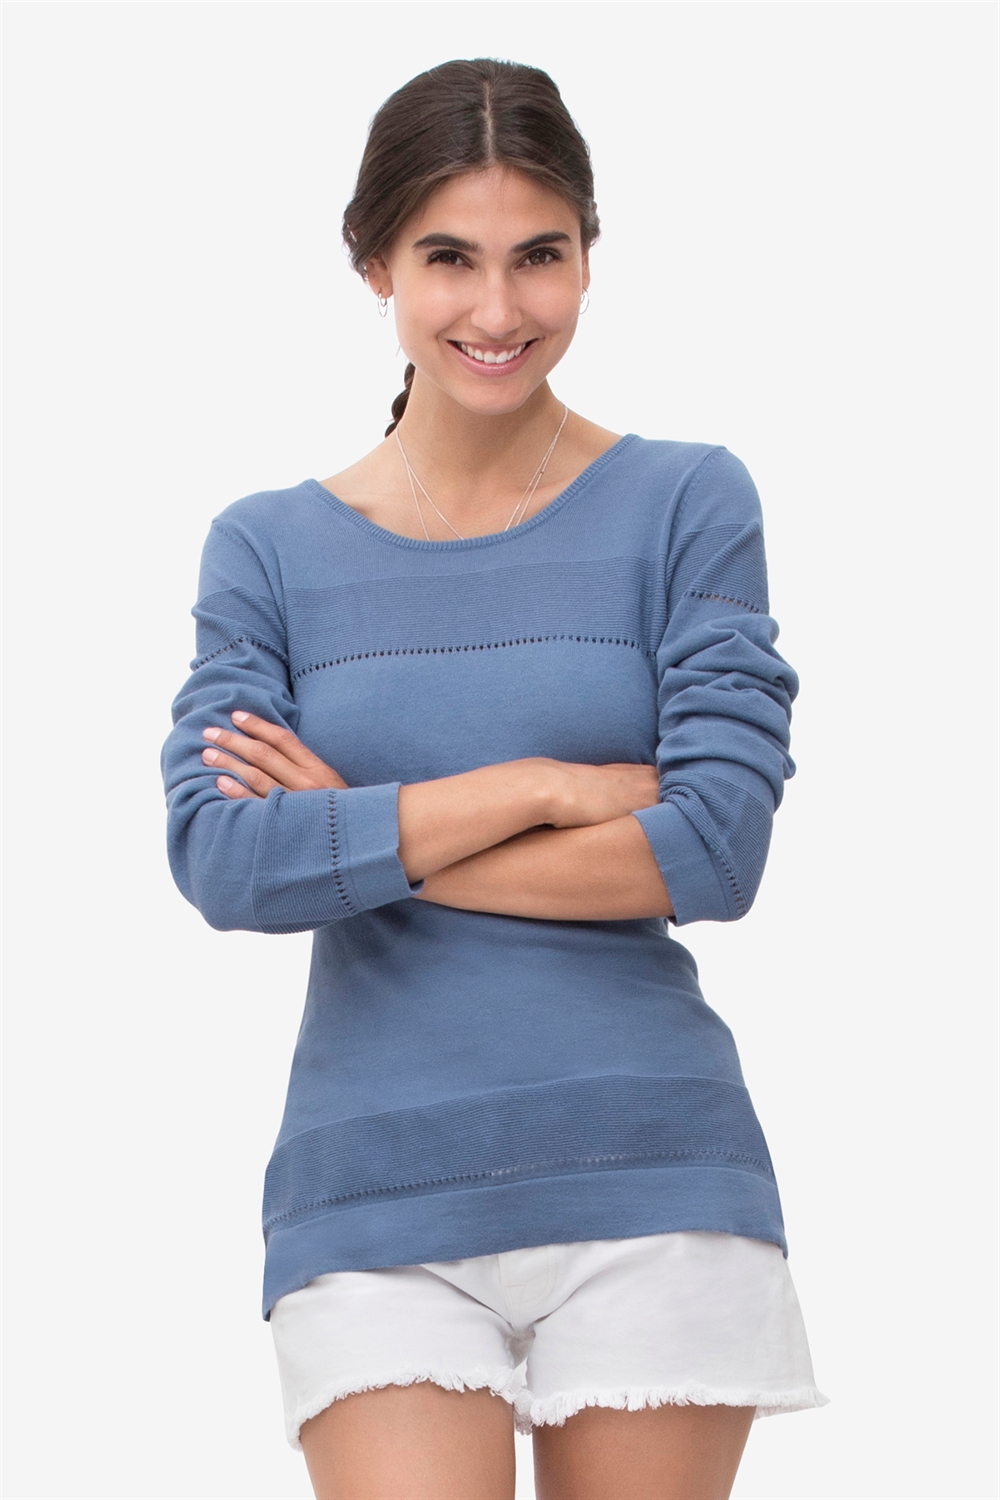 Blue nursing tee with fine knit pattern- 100% organic cotton